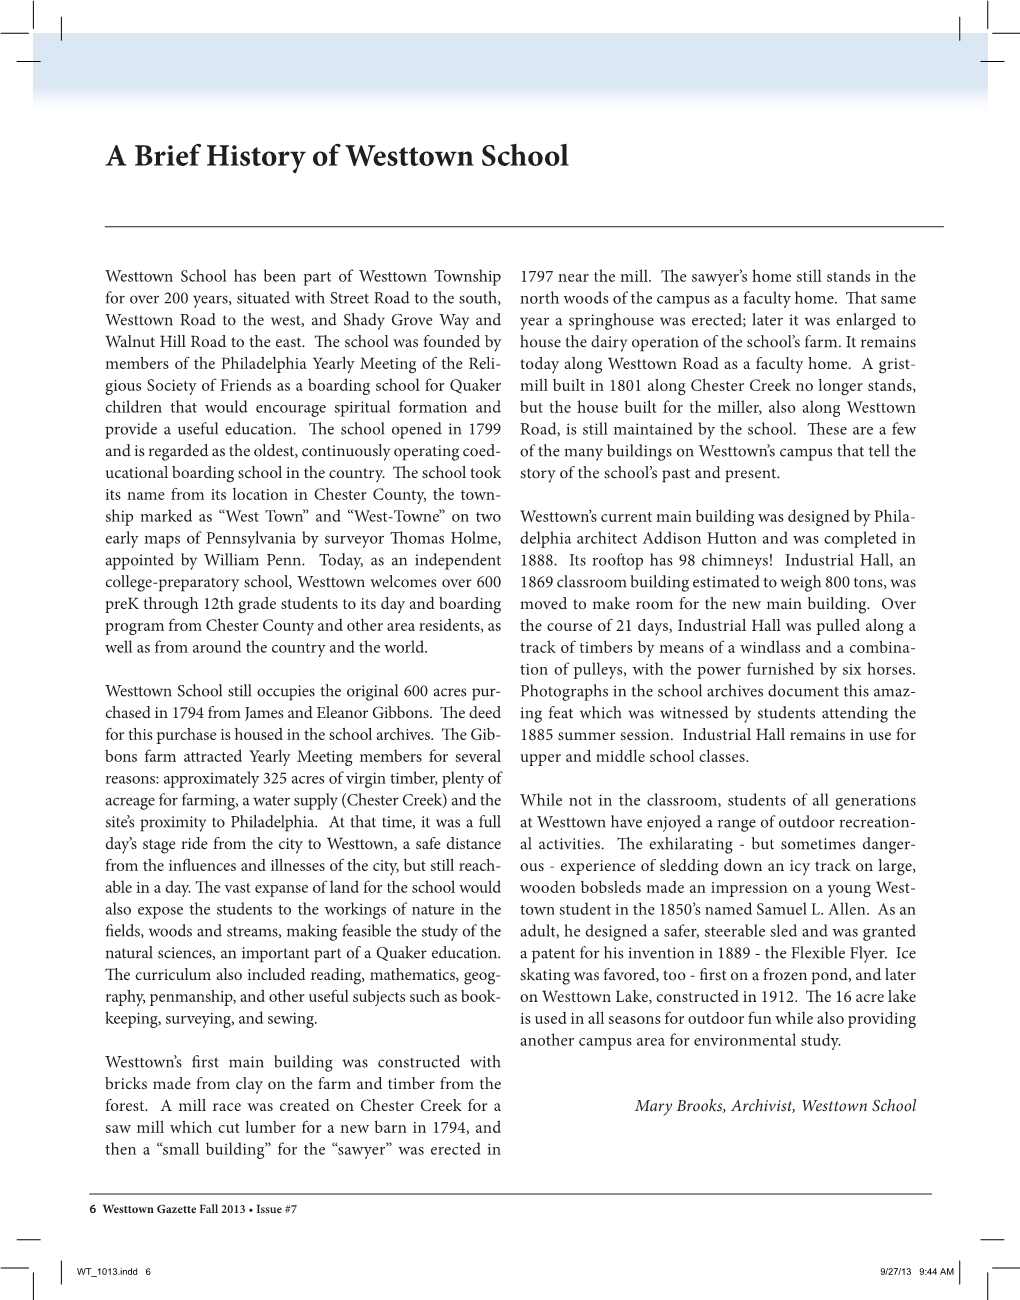 A Brief History of Westtown School